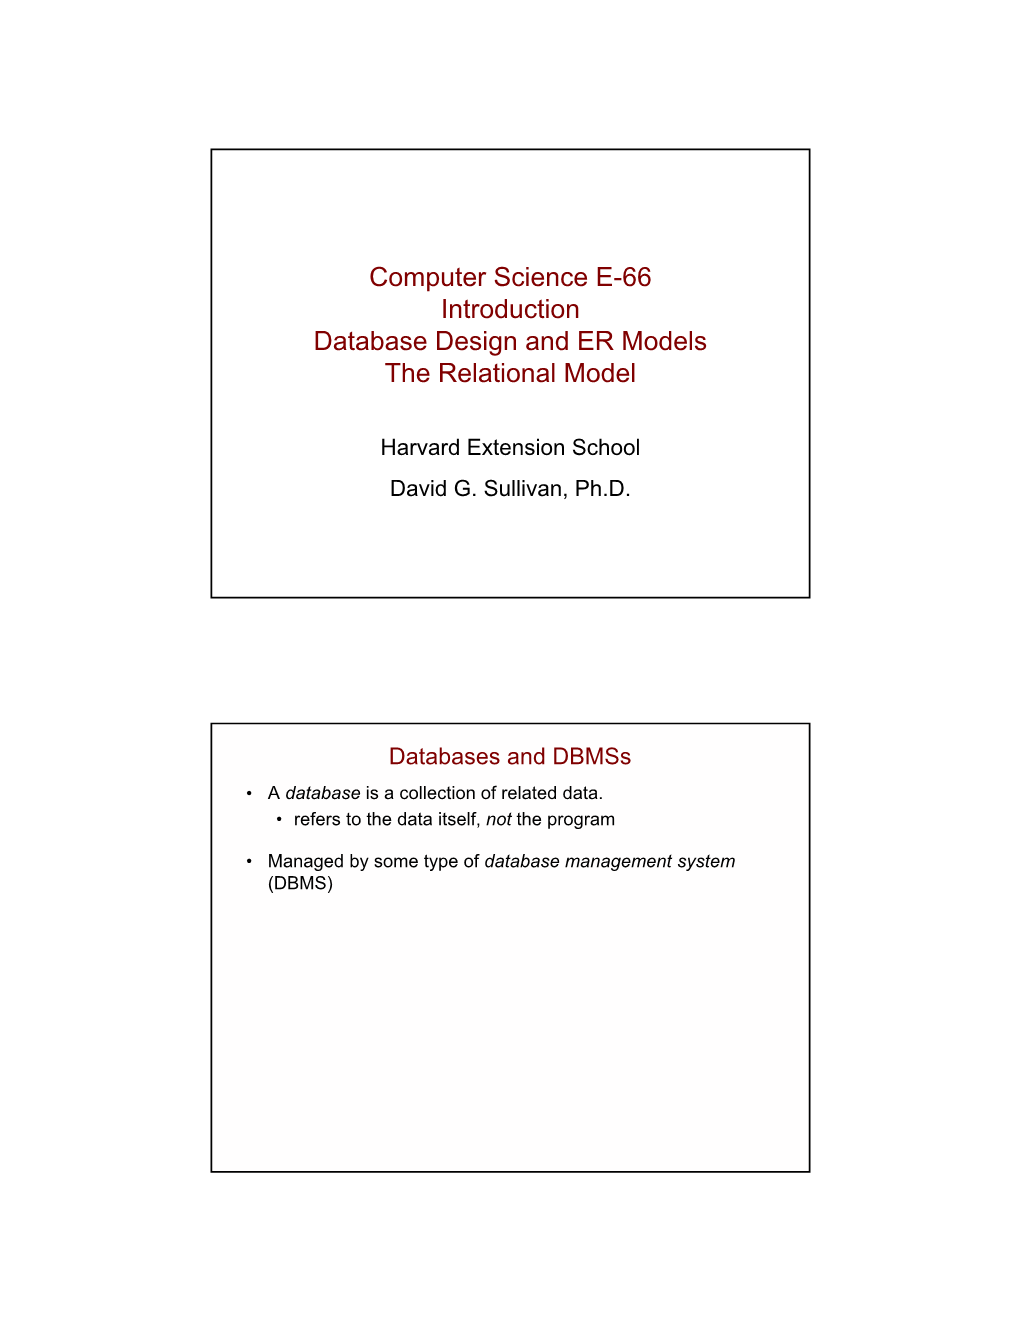 Computer Science E-66 Introduction Database Design and ER Models the Relational Model